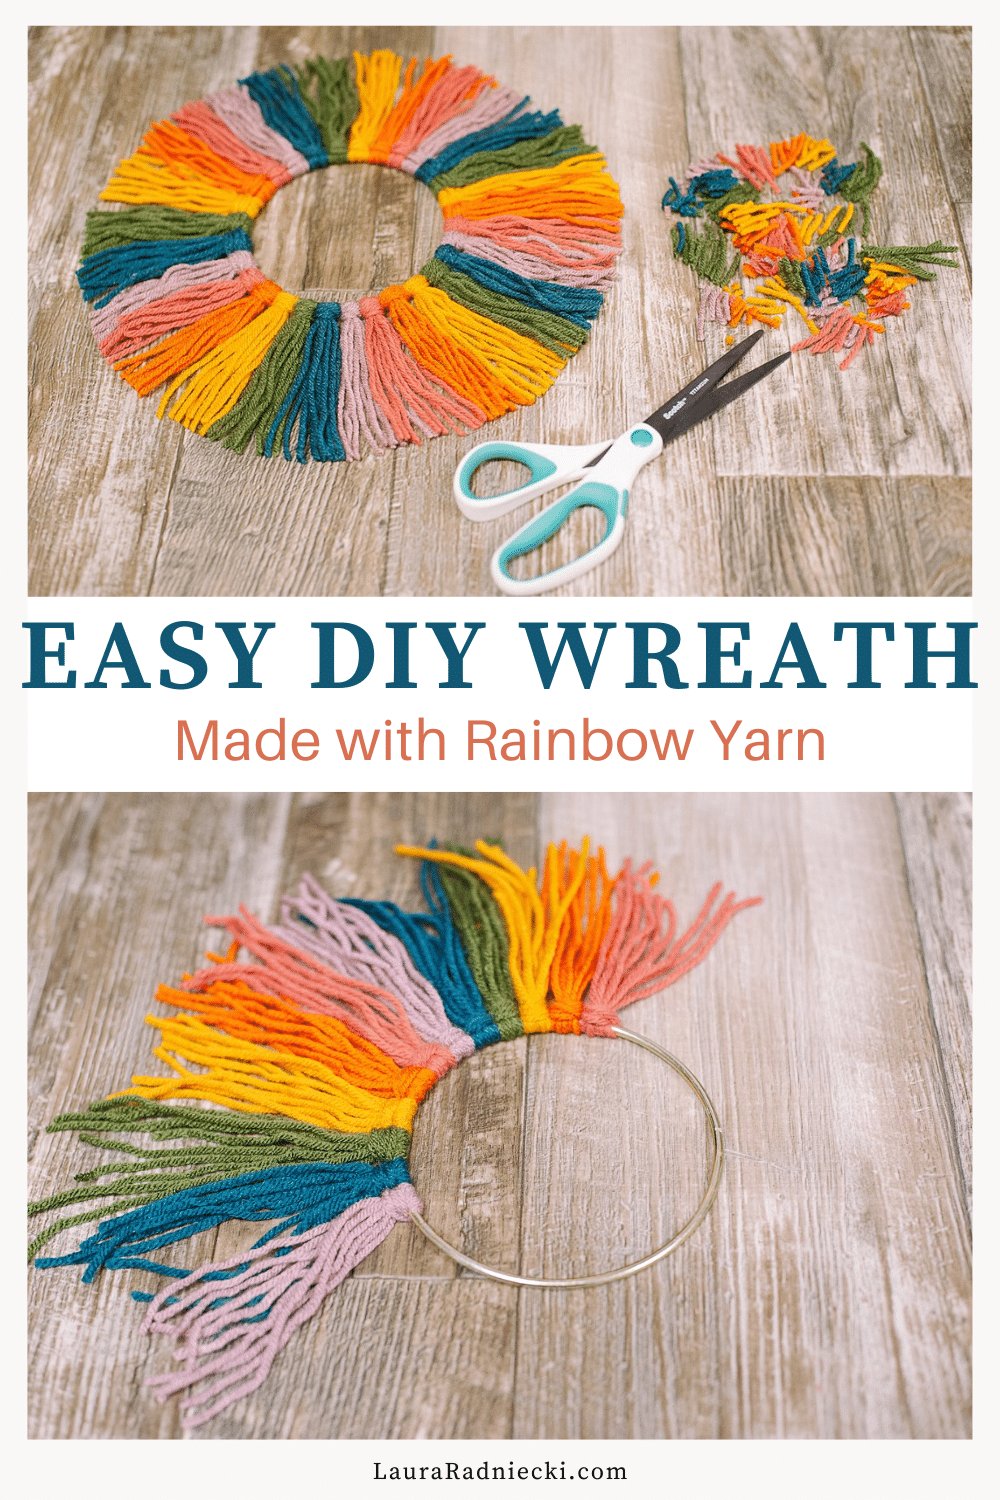 How to Make a Wreath with Rainbow Yarn